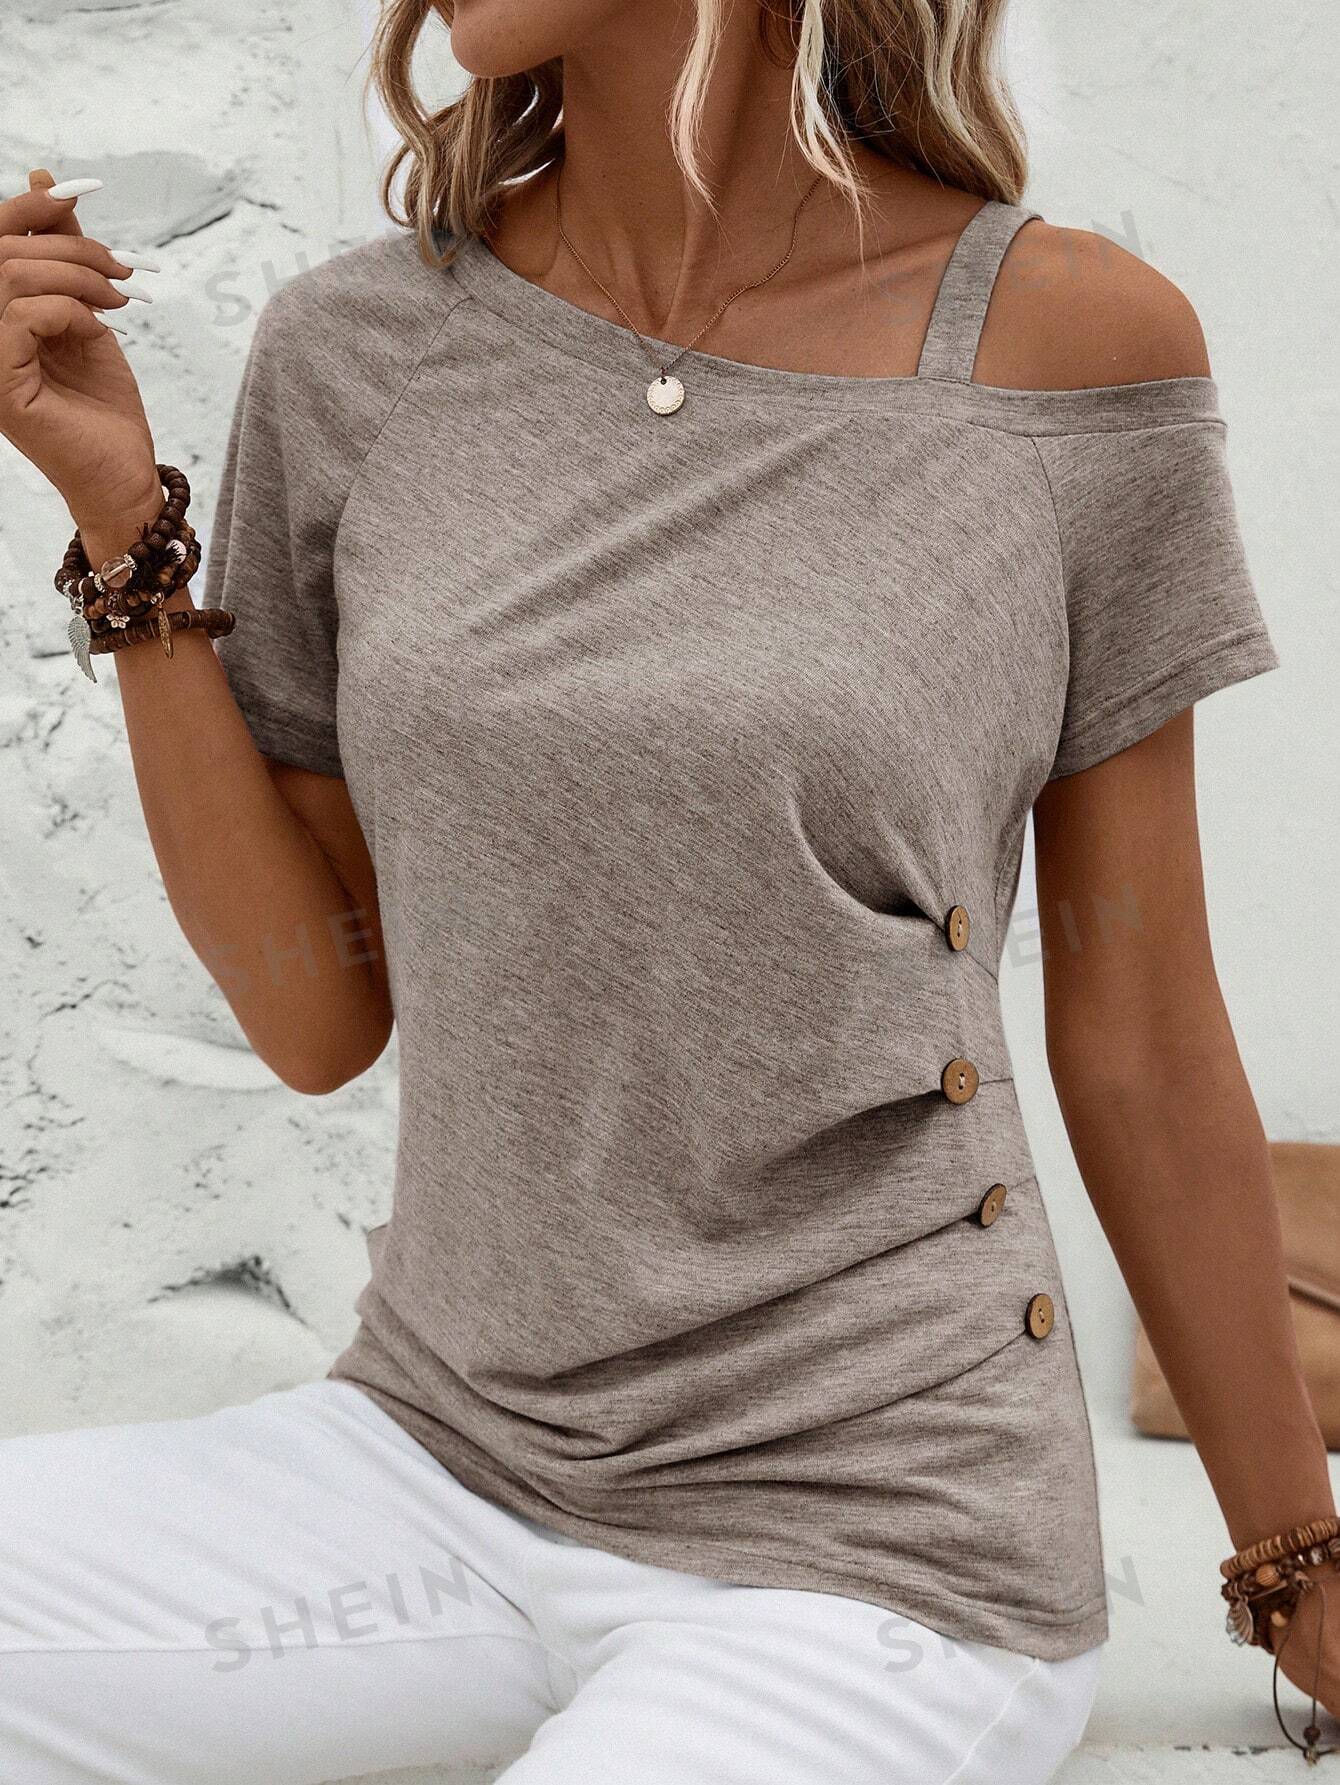 SHEIN Clasi Асимметричная футболка с воротником и пуговицами, мокко браун